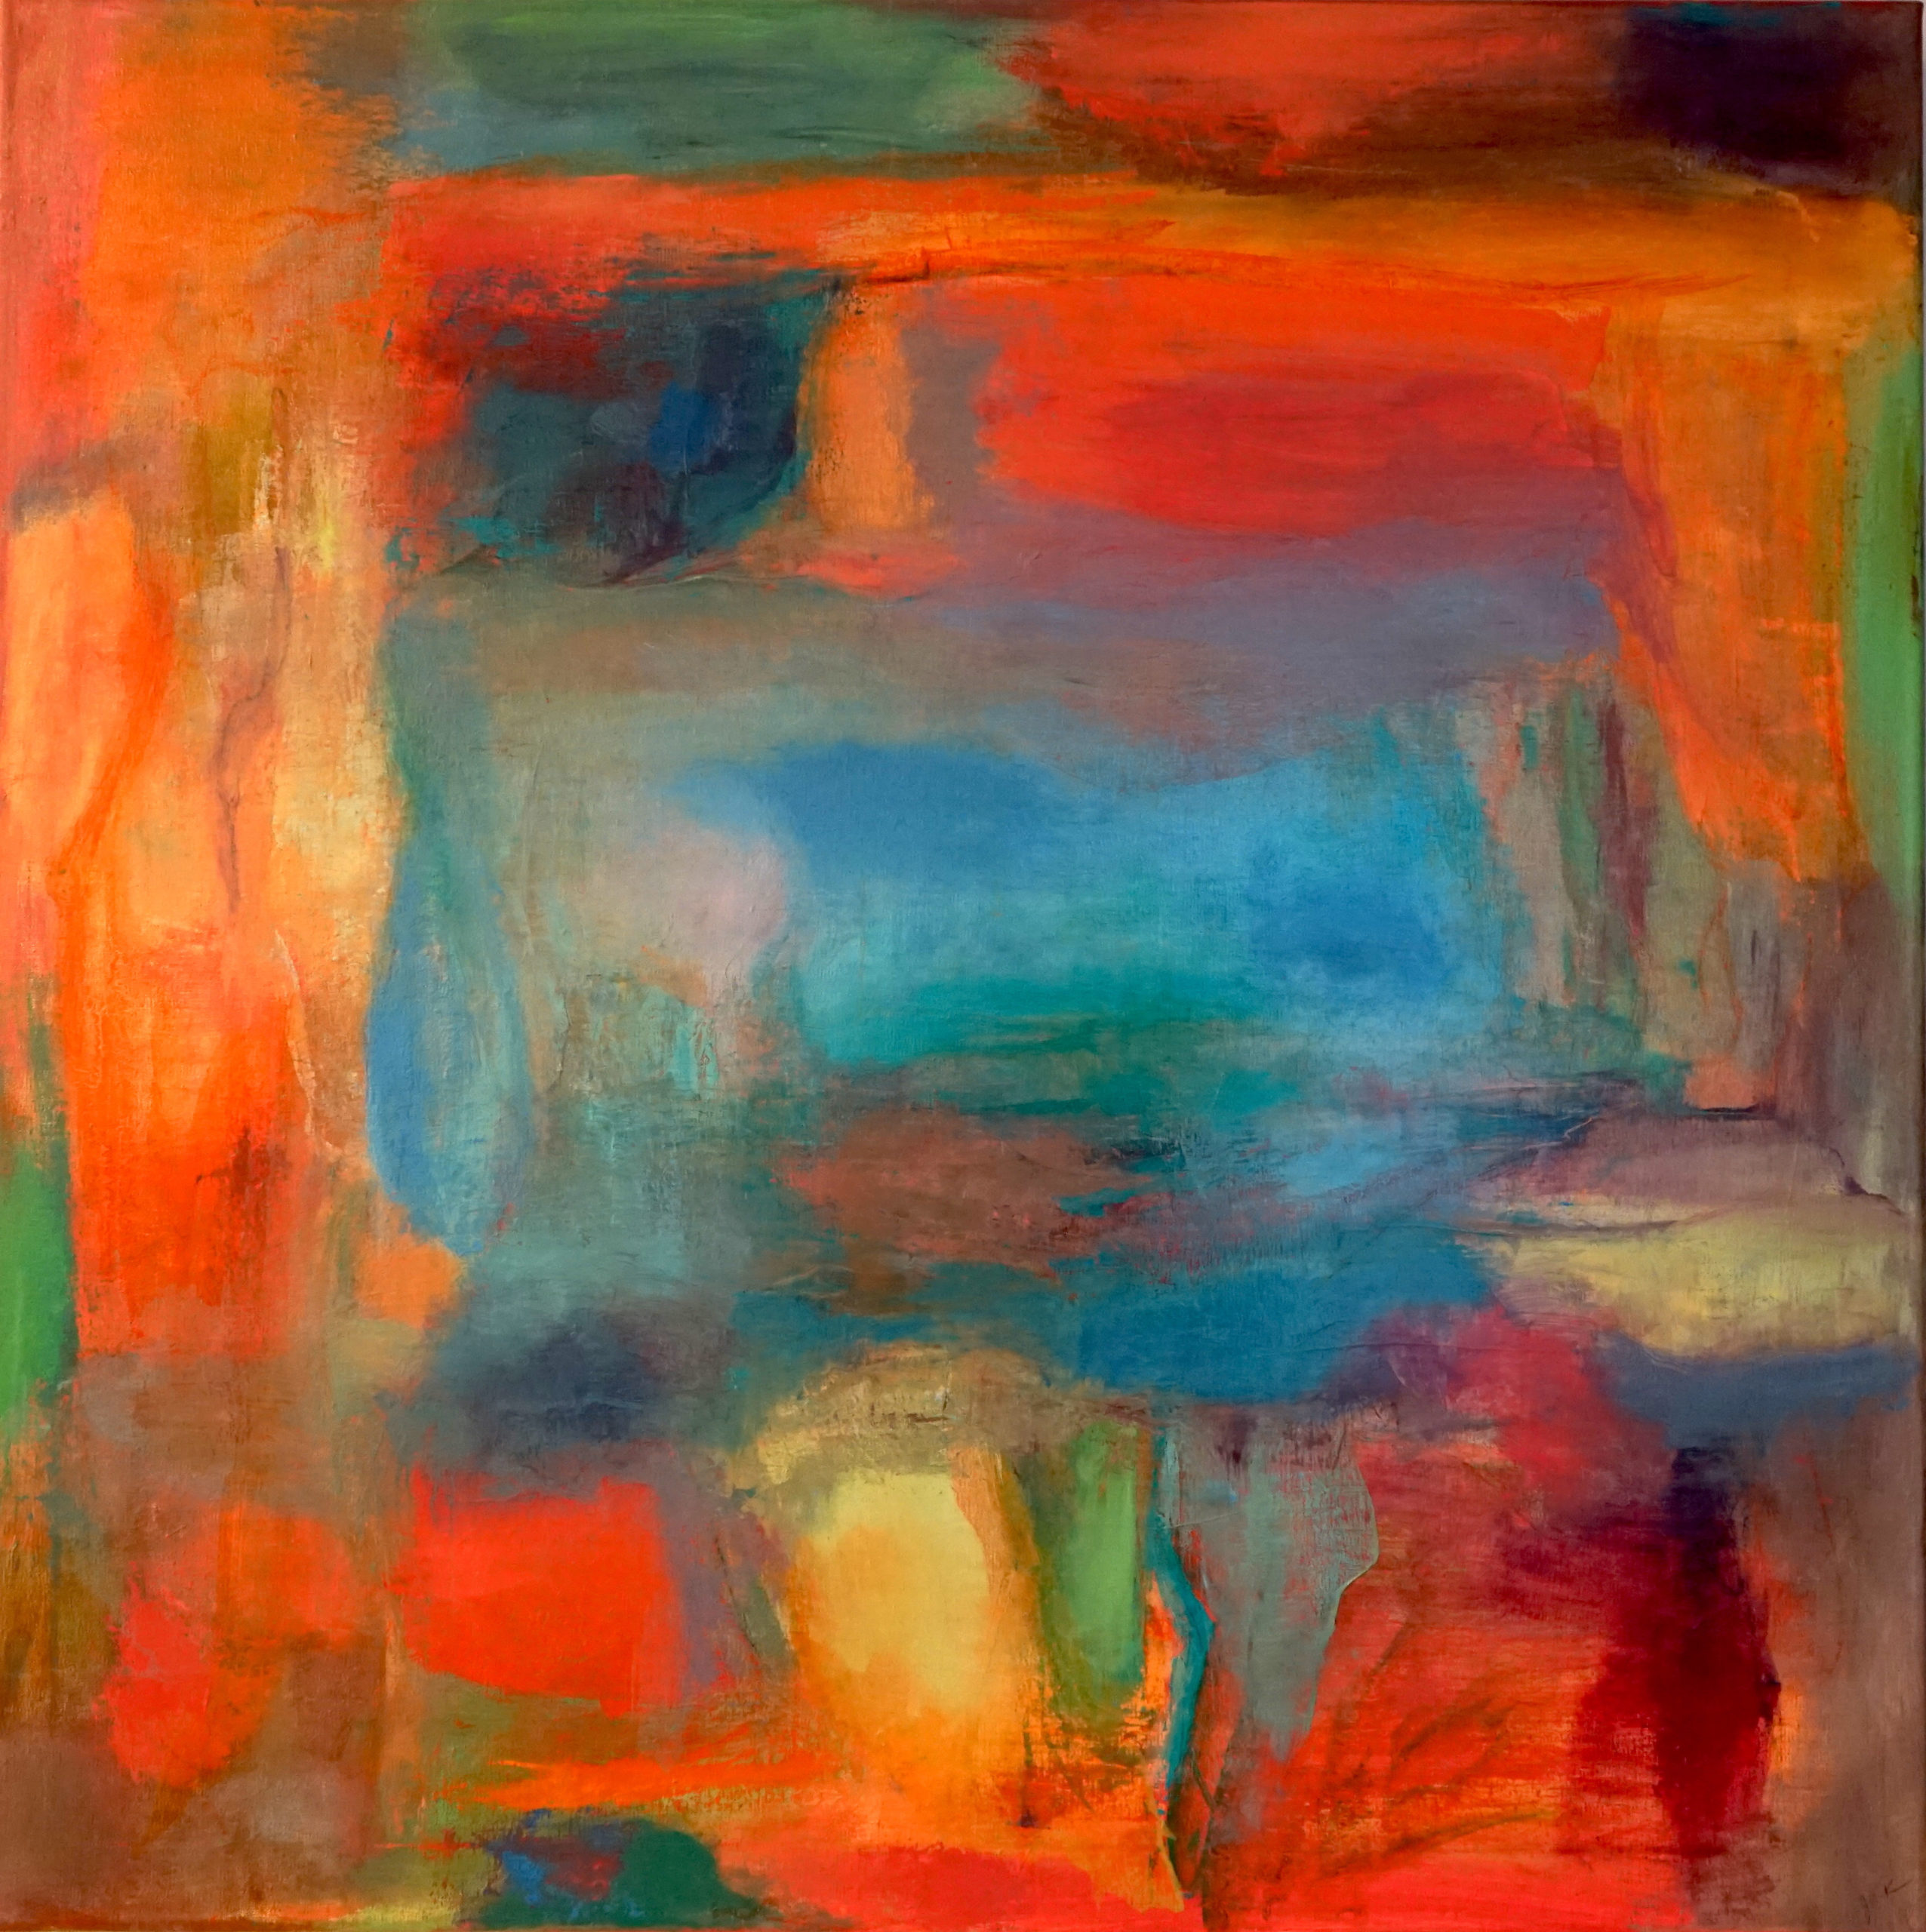 Arroyo by Judy Keene, oil on linen, 30 × 30 at Craven Allen Gallery.